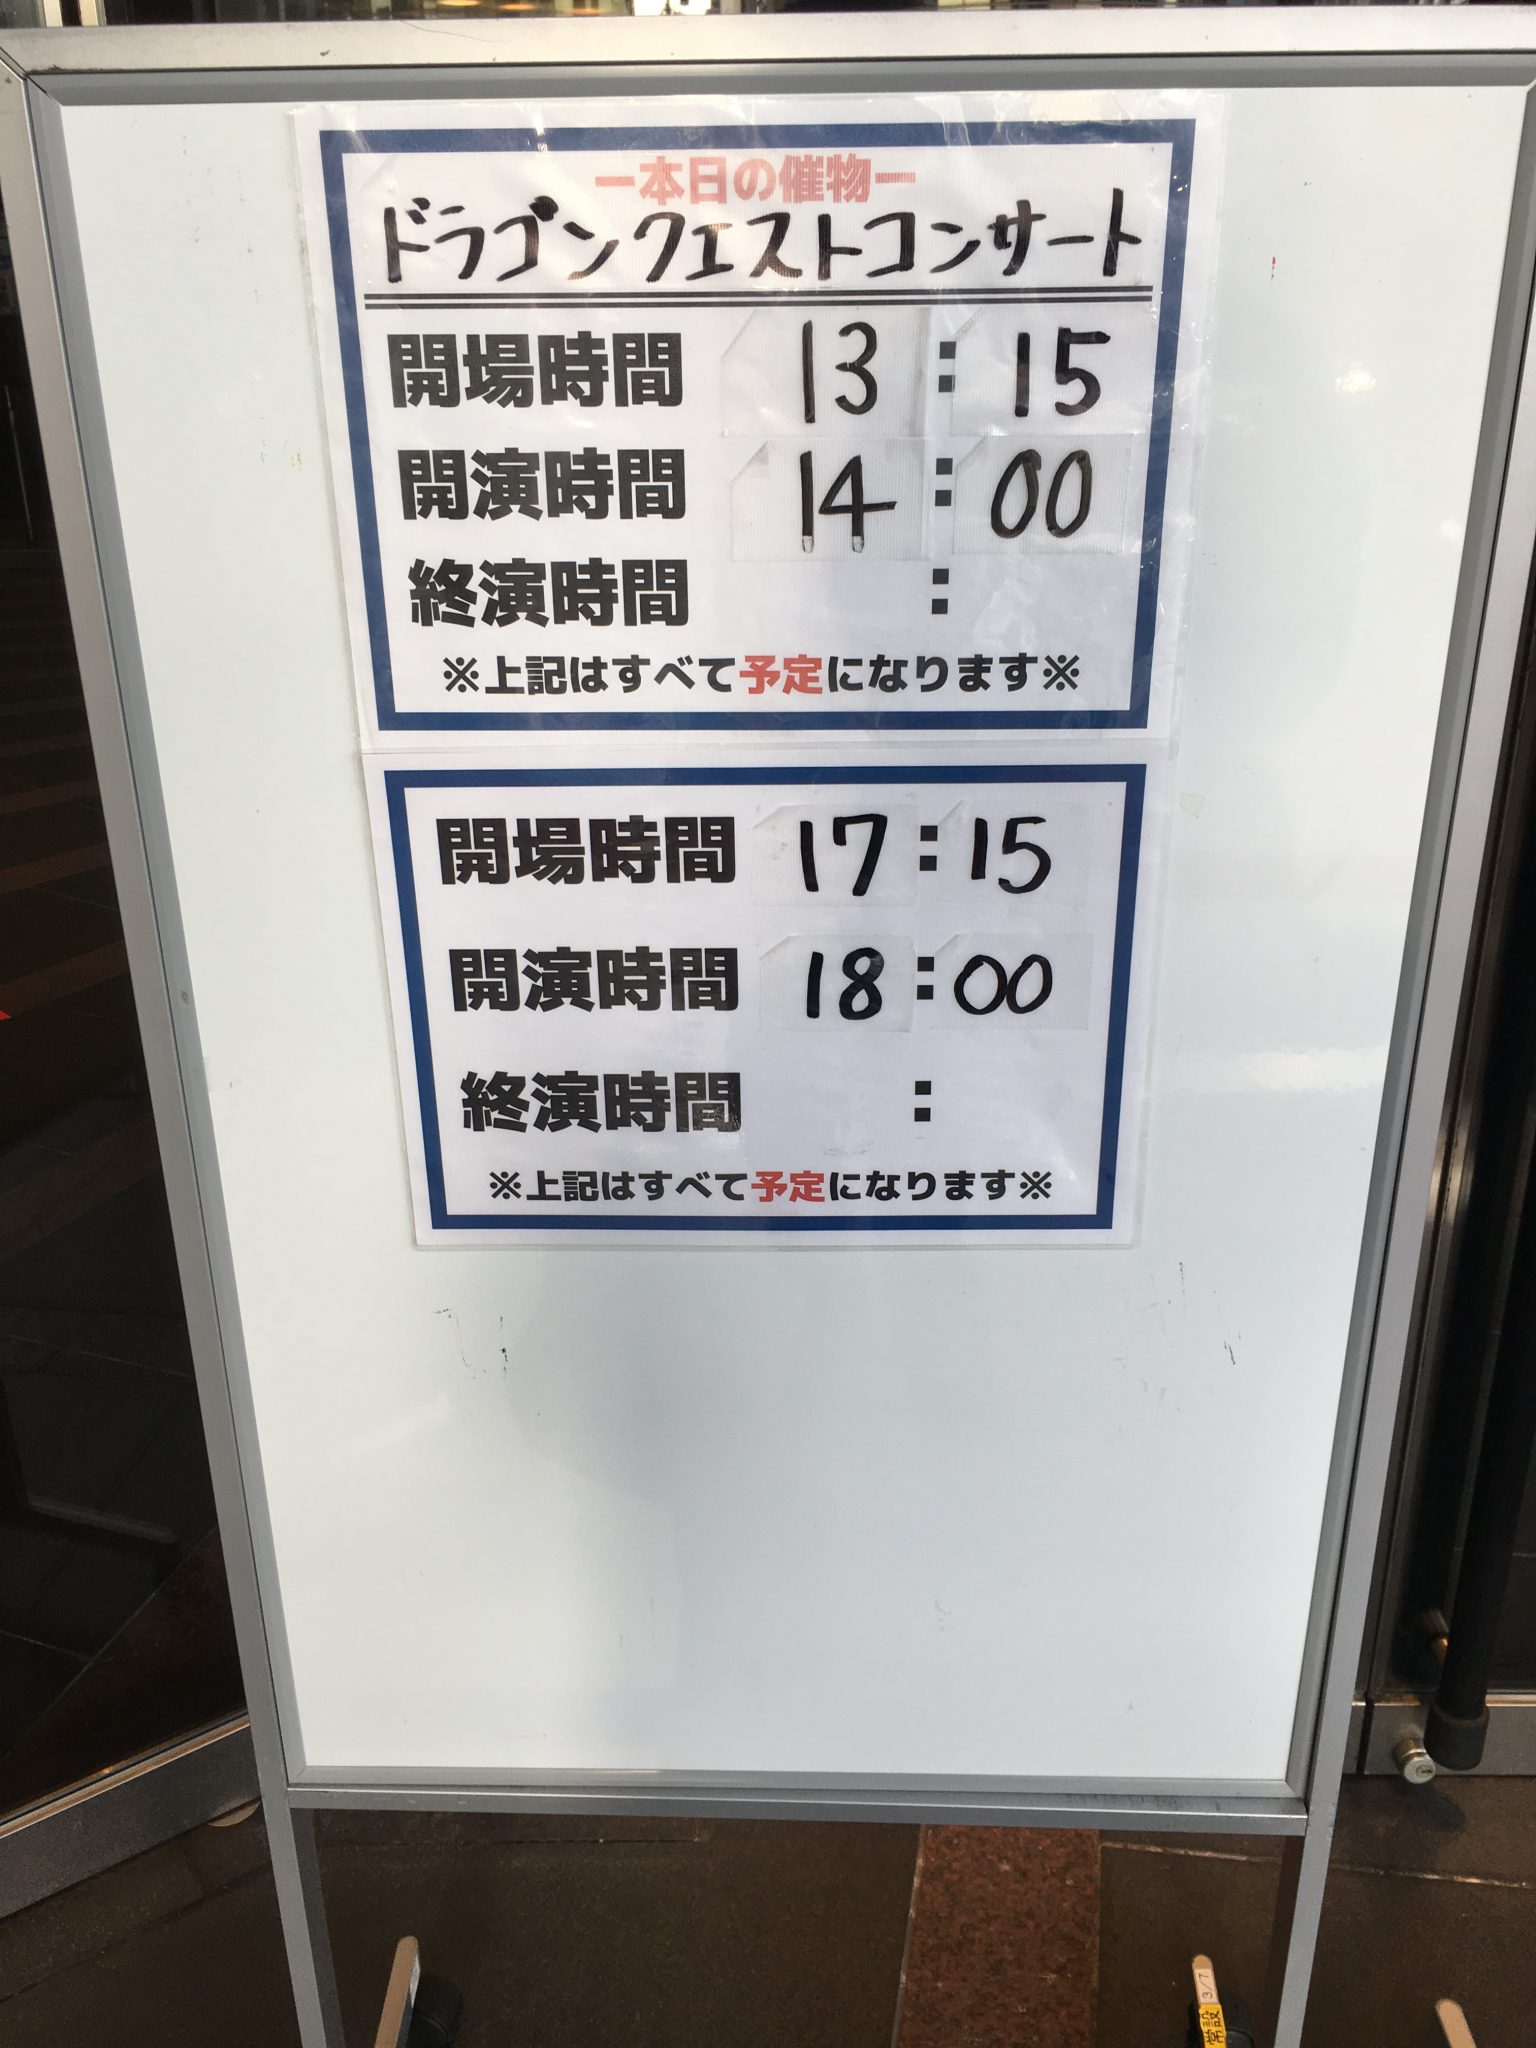 Osaka Shion Wind Orchestra ドラゴンクエストコンサート ドラクエ4 5 6 In 神戸 追加公演 参加レポート Mnaの世界